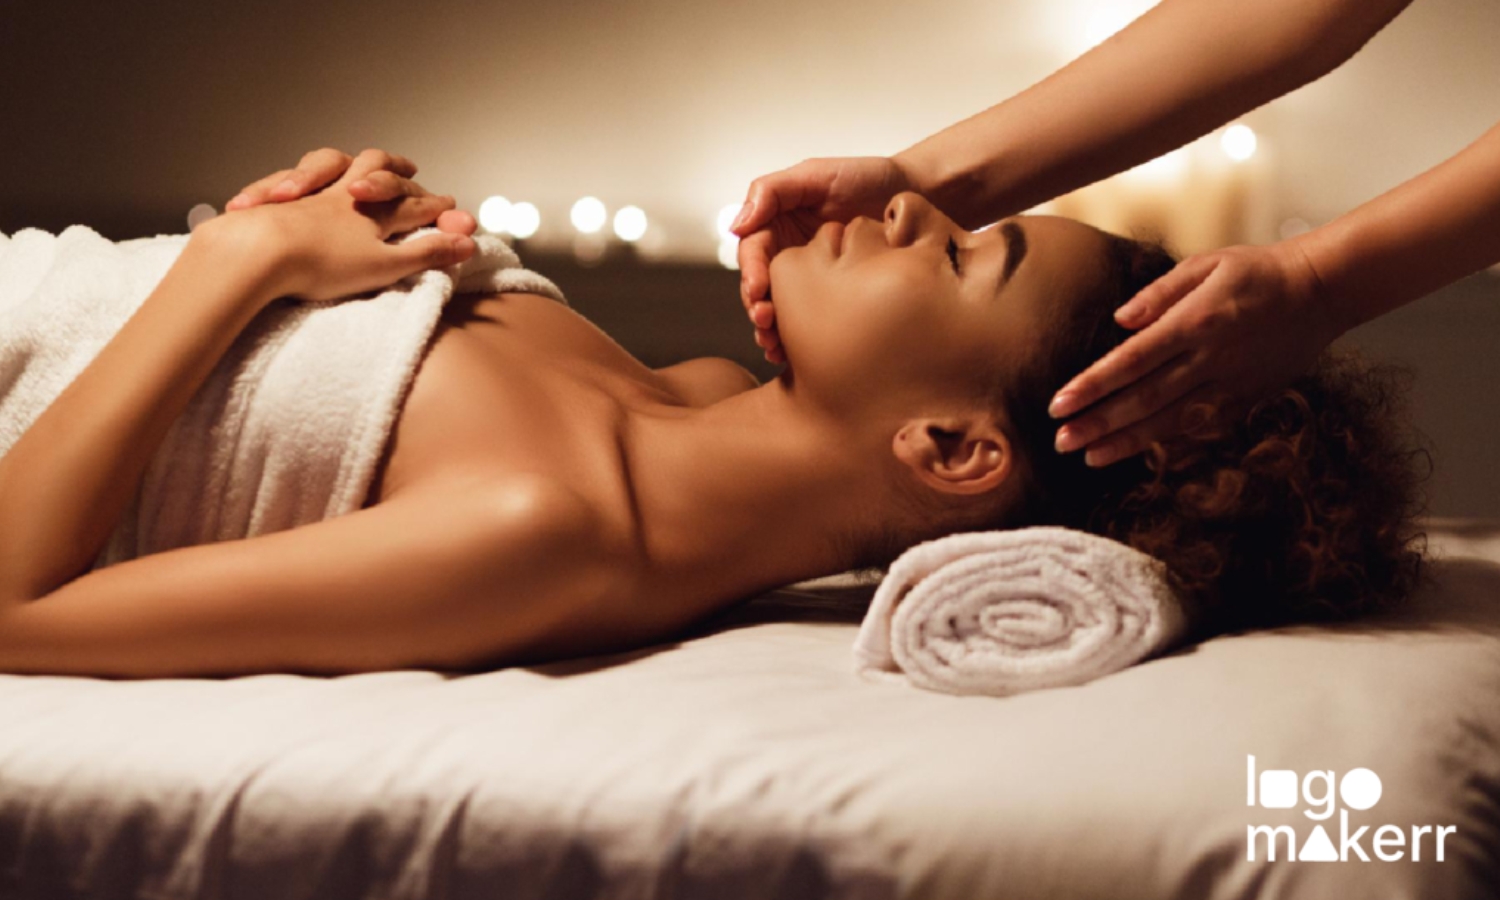 Massage Logo - Featured Image